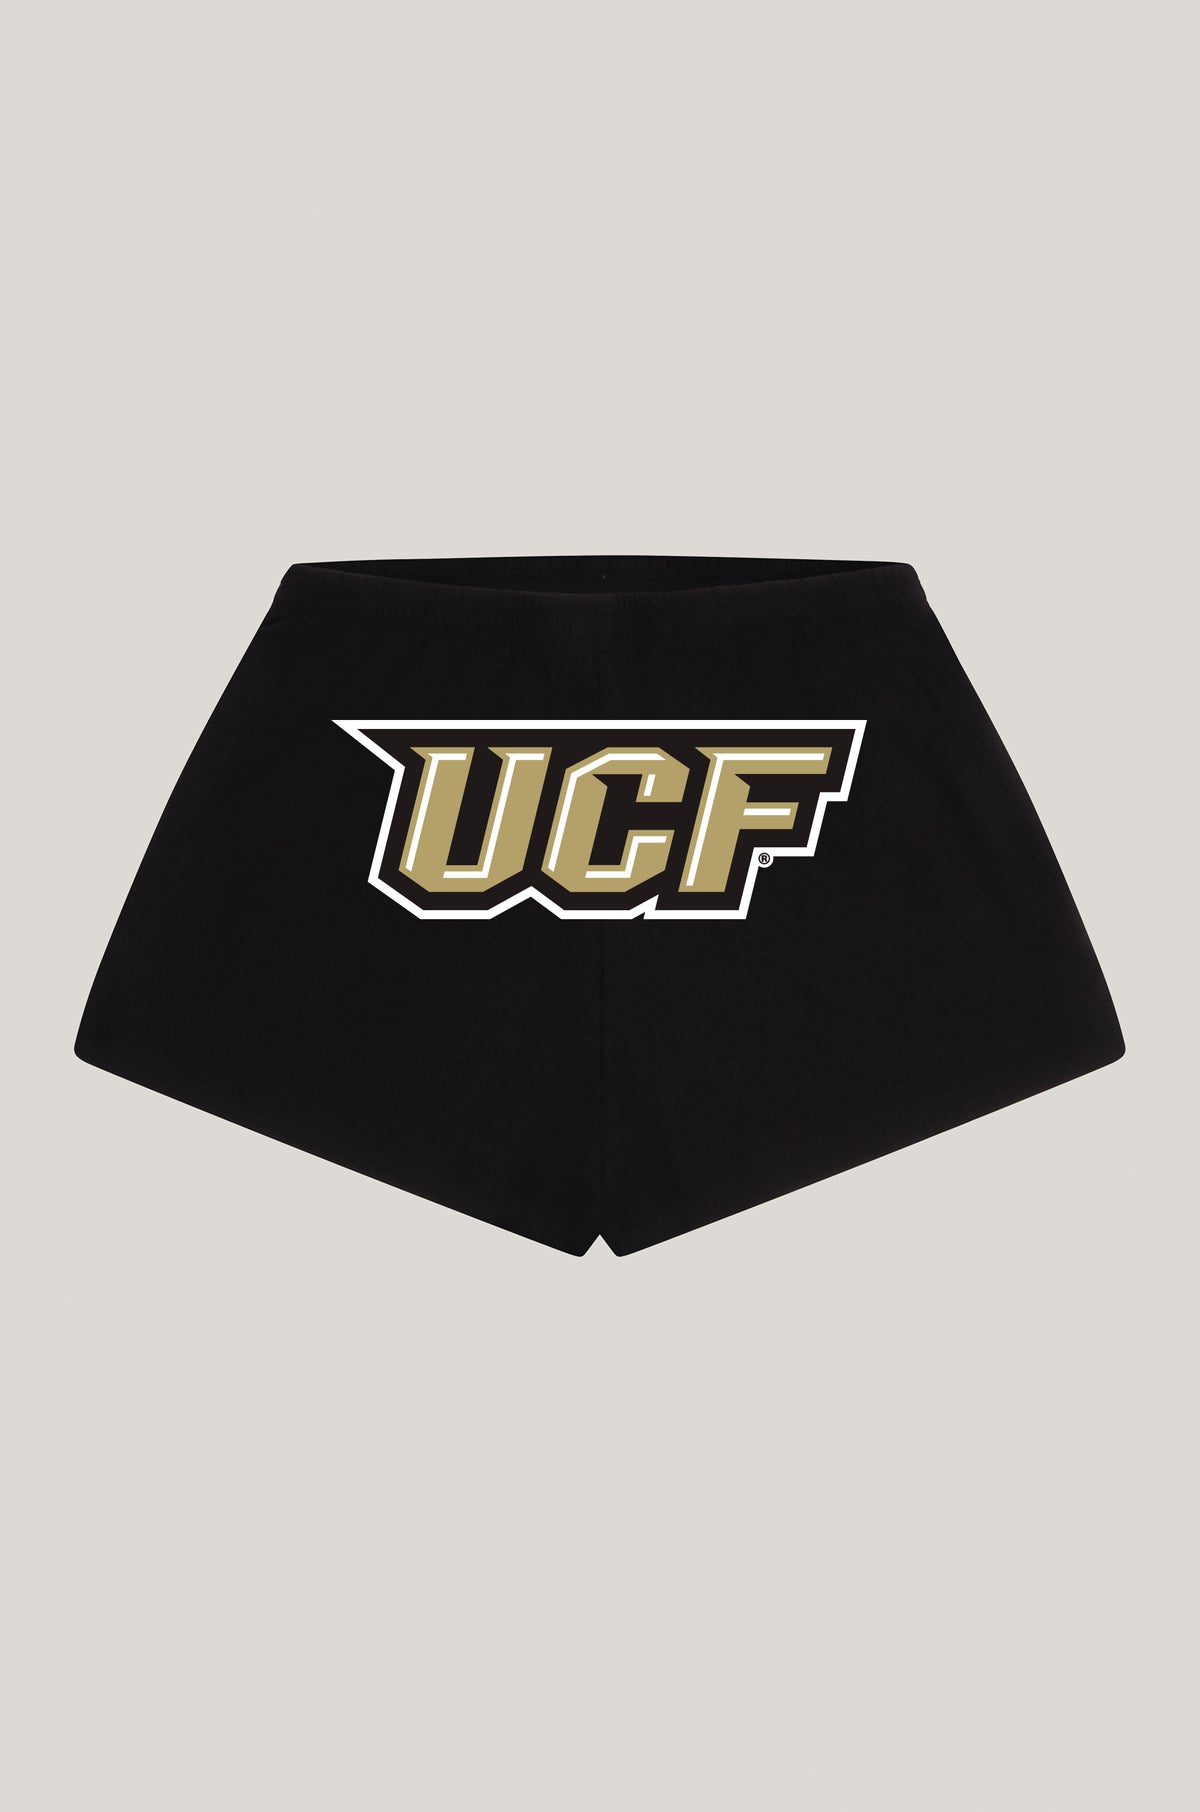 UCF Soffee Shorts